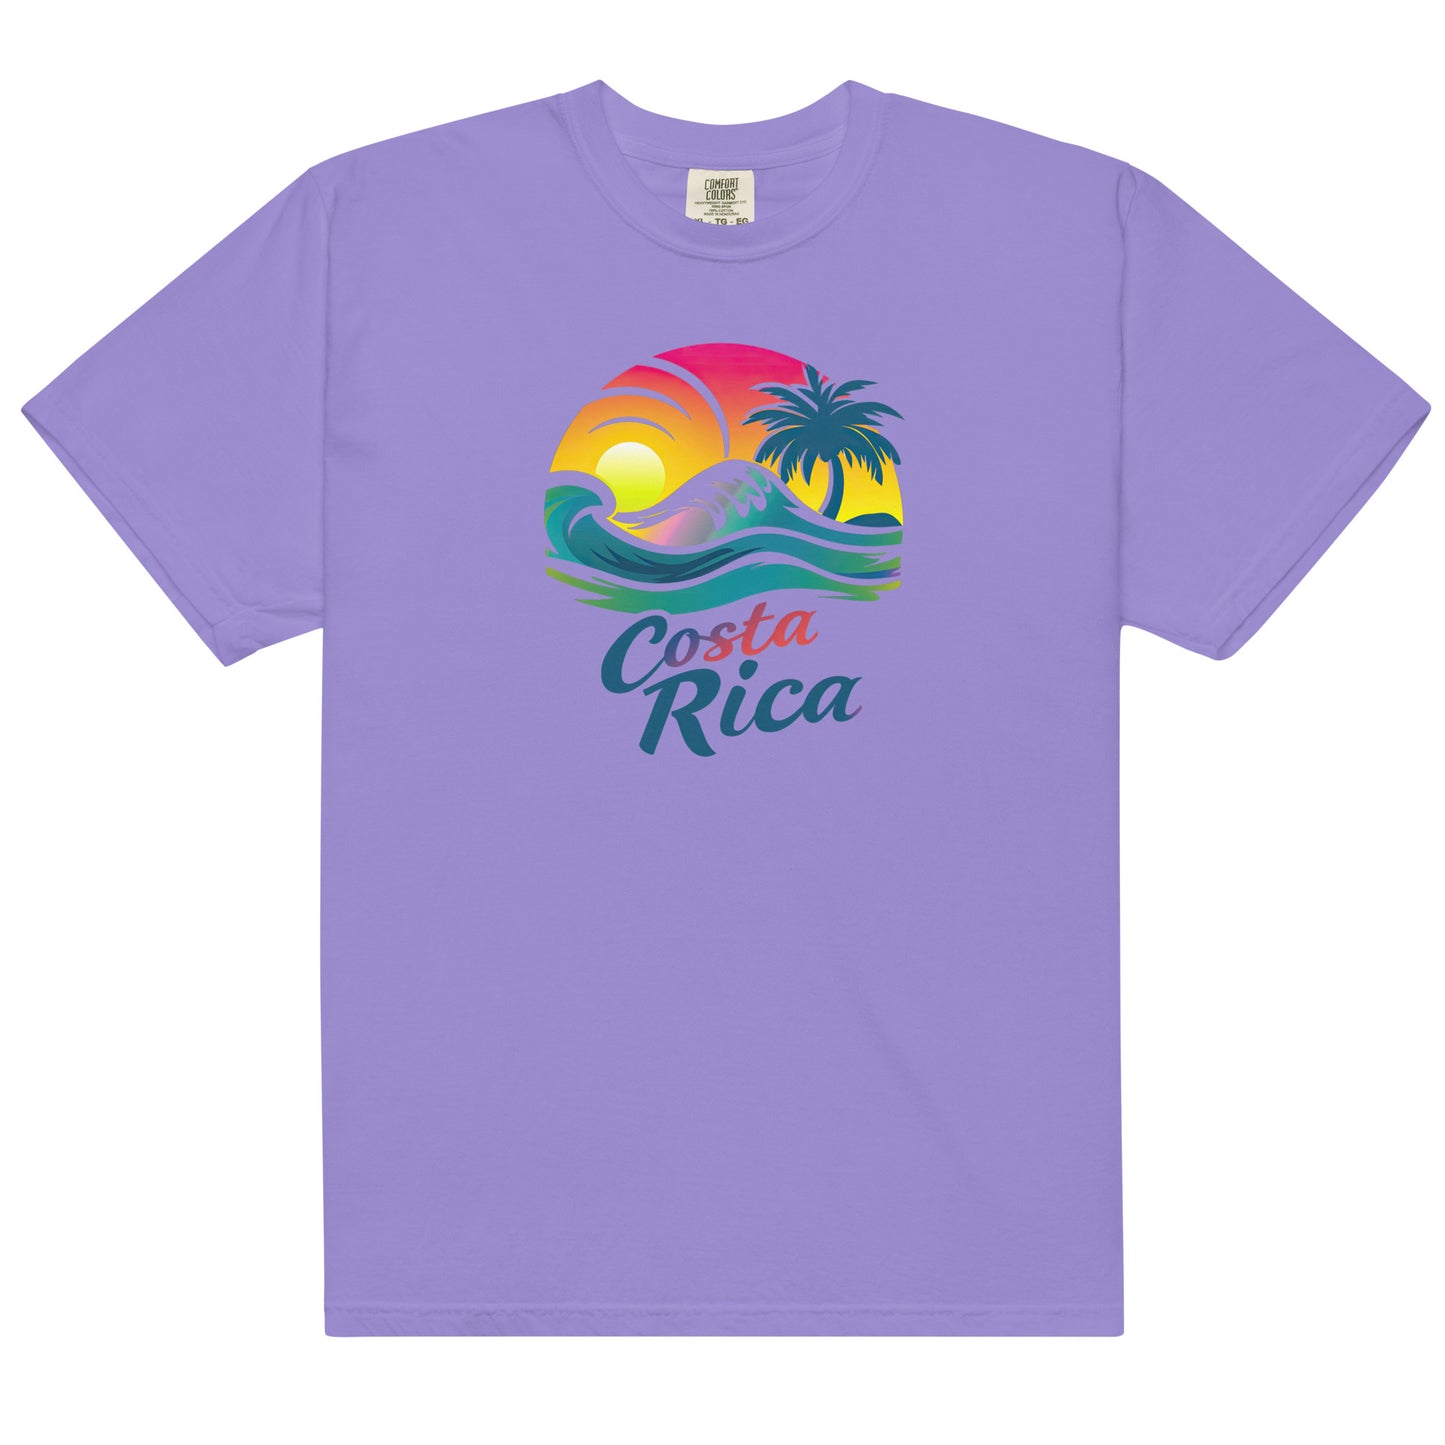 Costa Rica Beach and Palm Tree t-shirt - Unisex